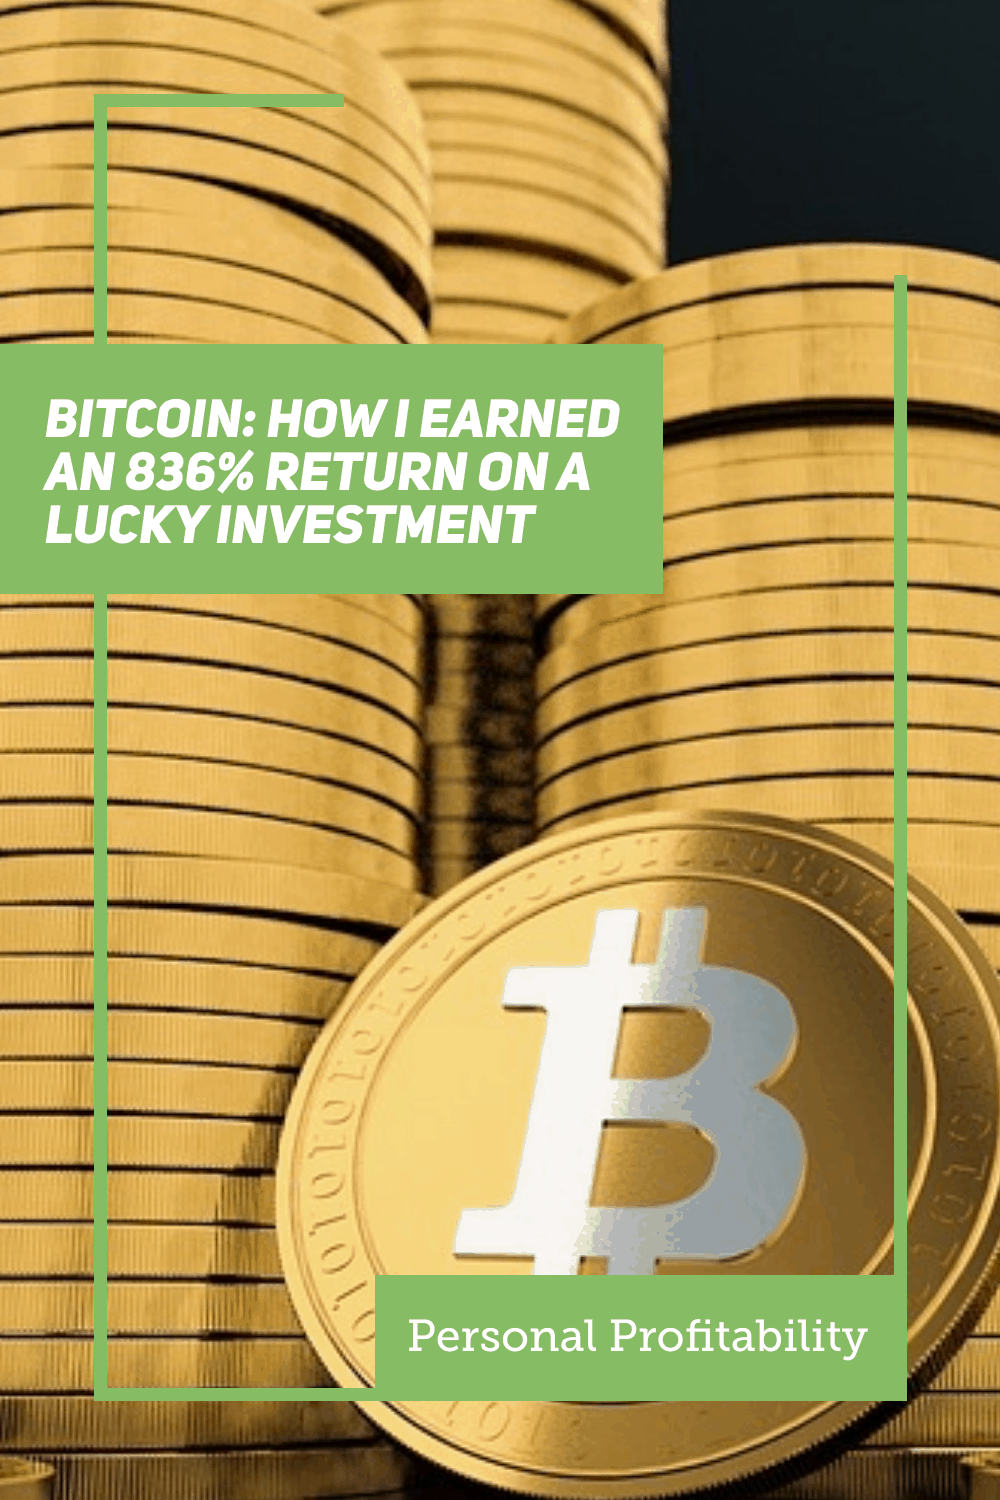 Bitcoin: How I Earned an 836% Return on a Lucky Investment